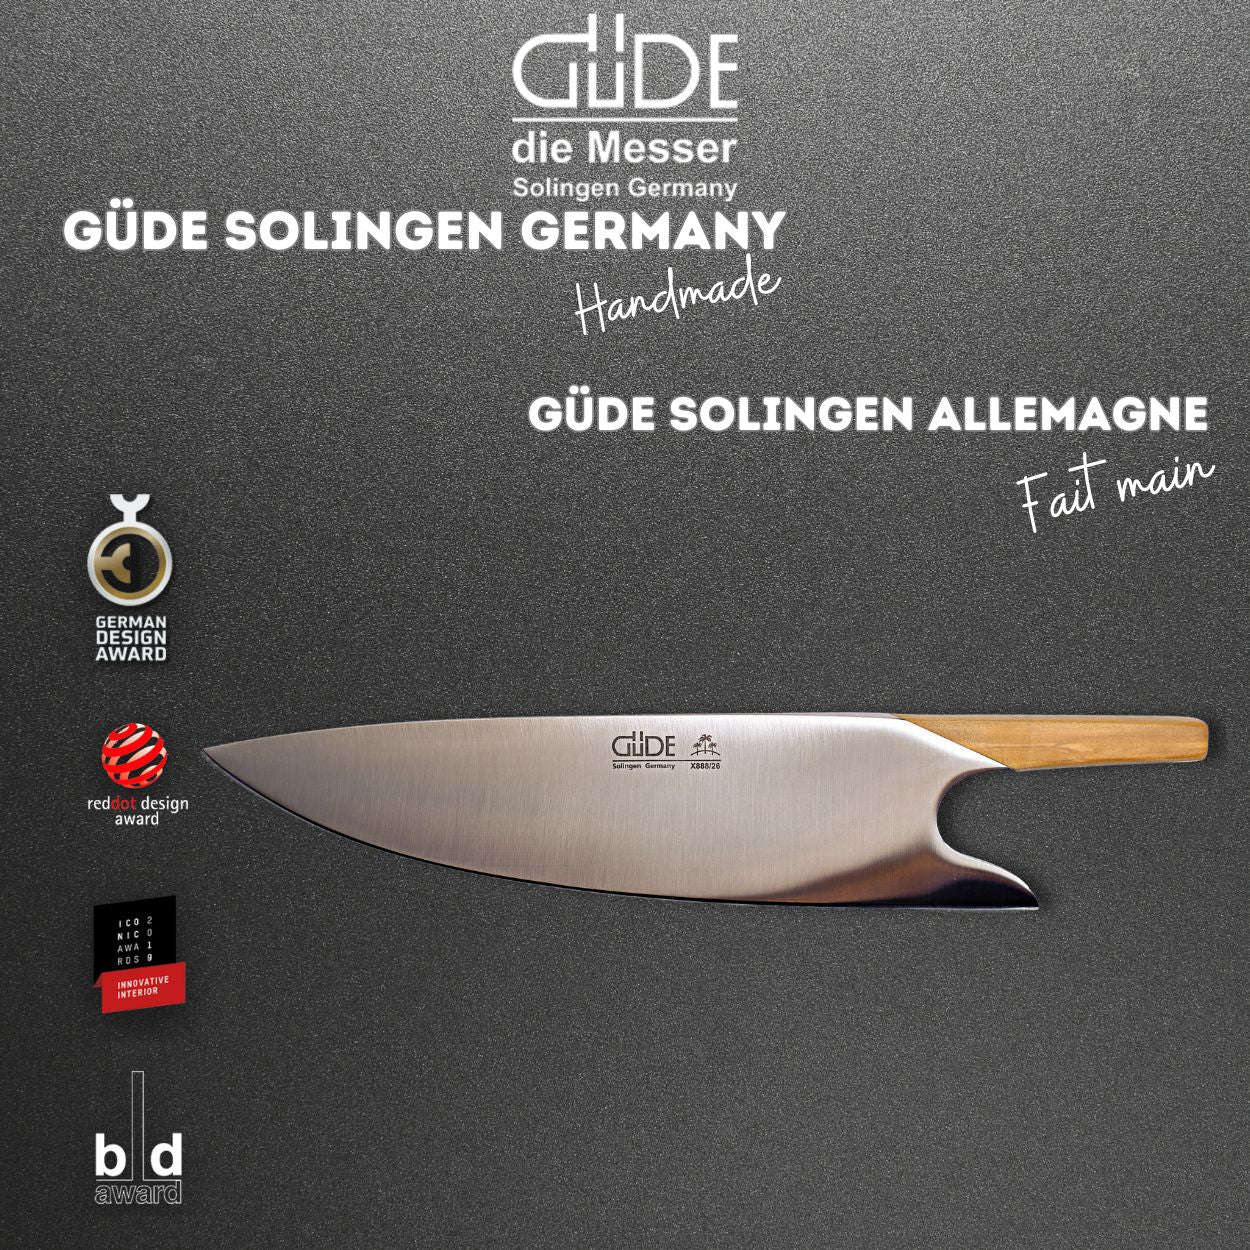 The Knife by GÜDE SOLINGEN